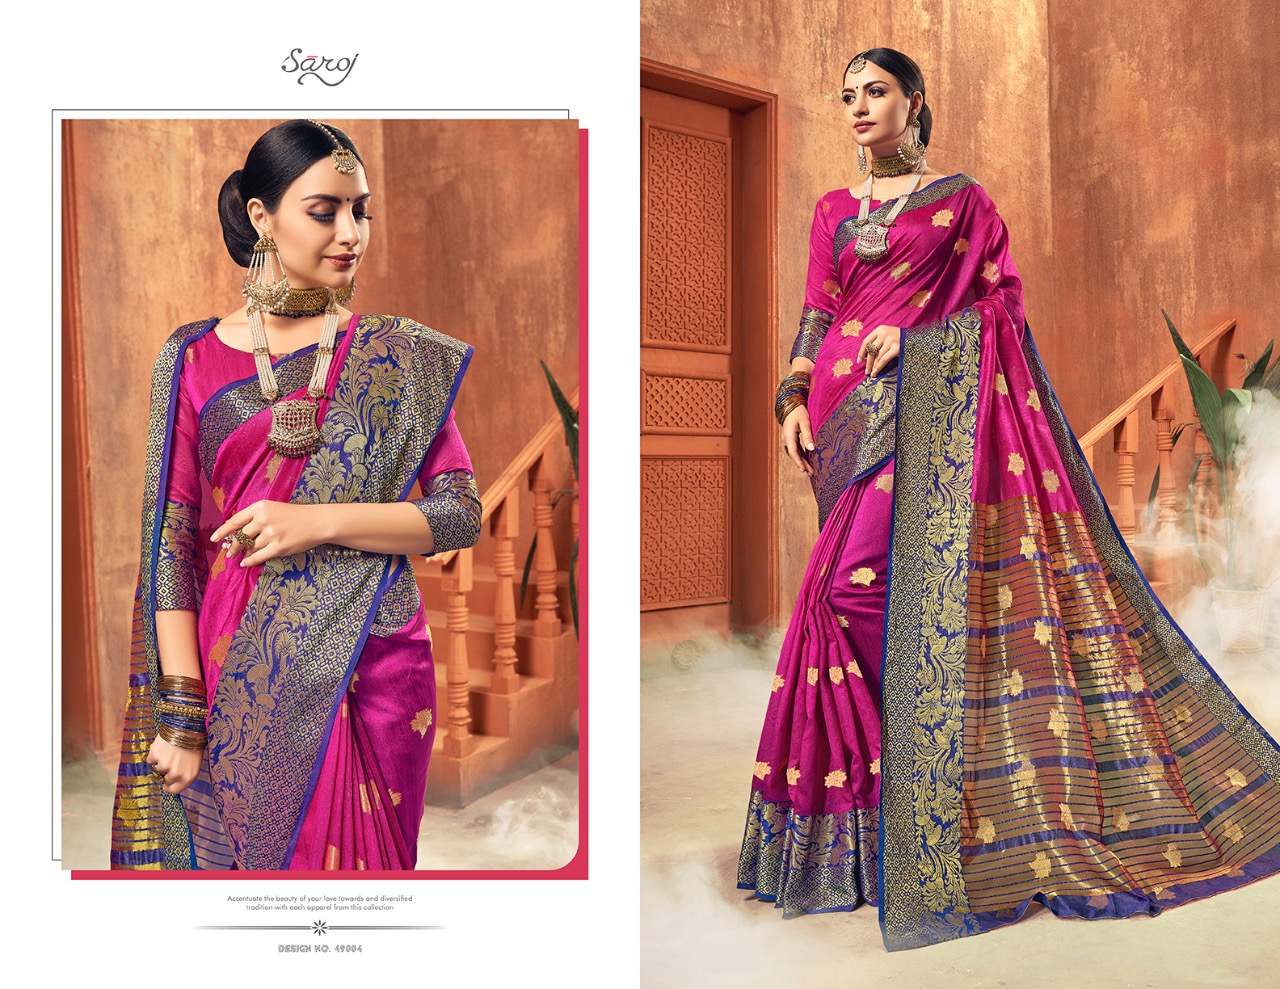 Saroj presents priyanka beautiful rich look sarees concept